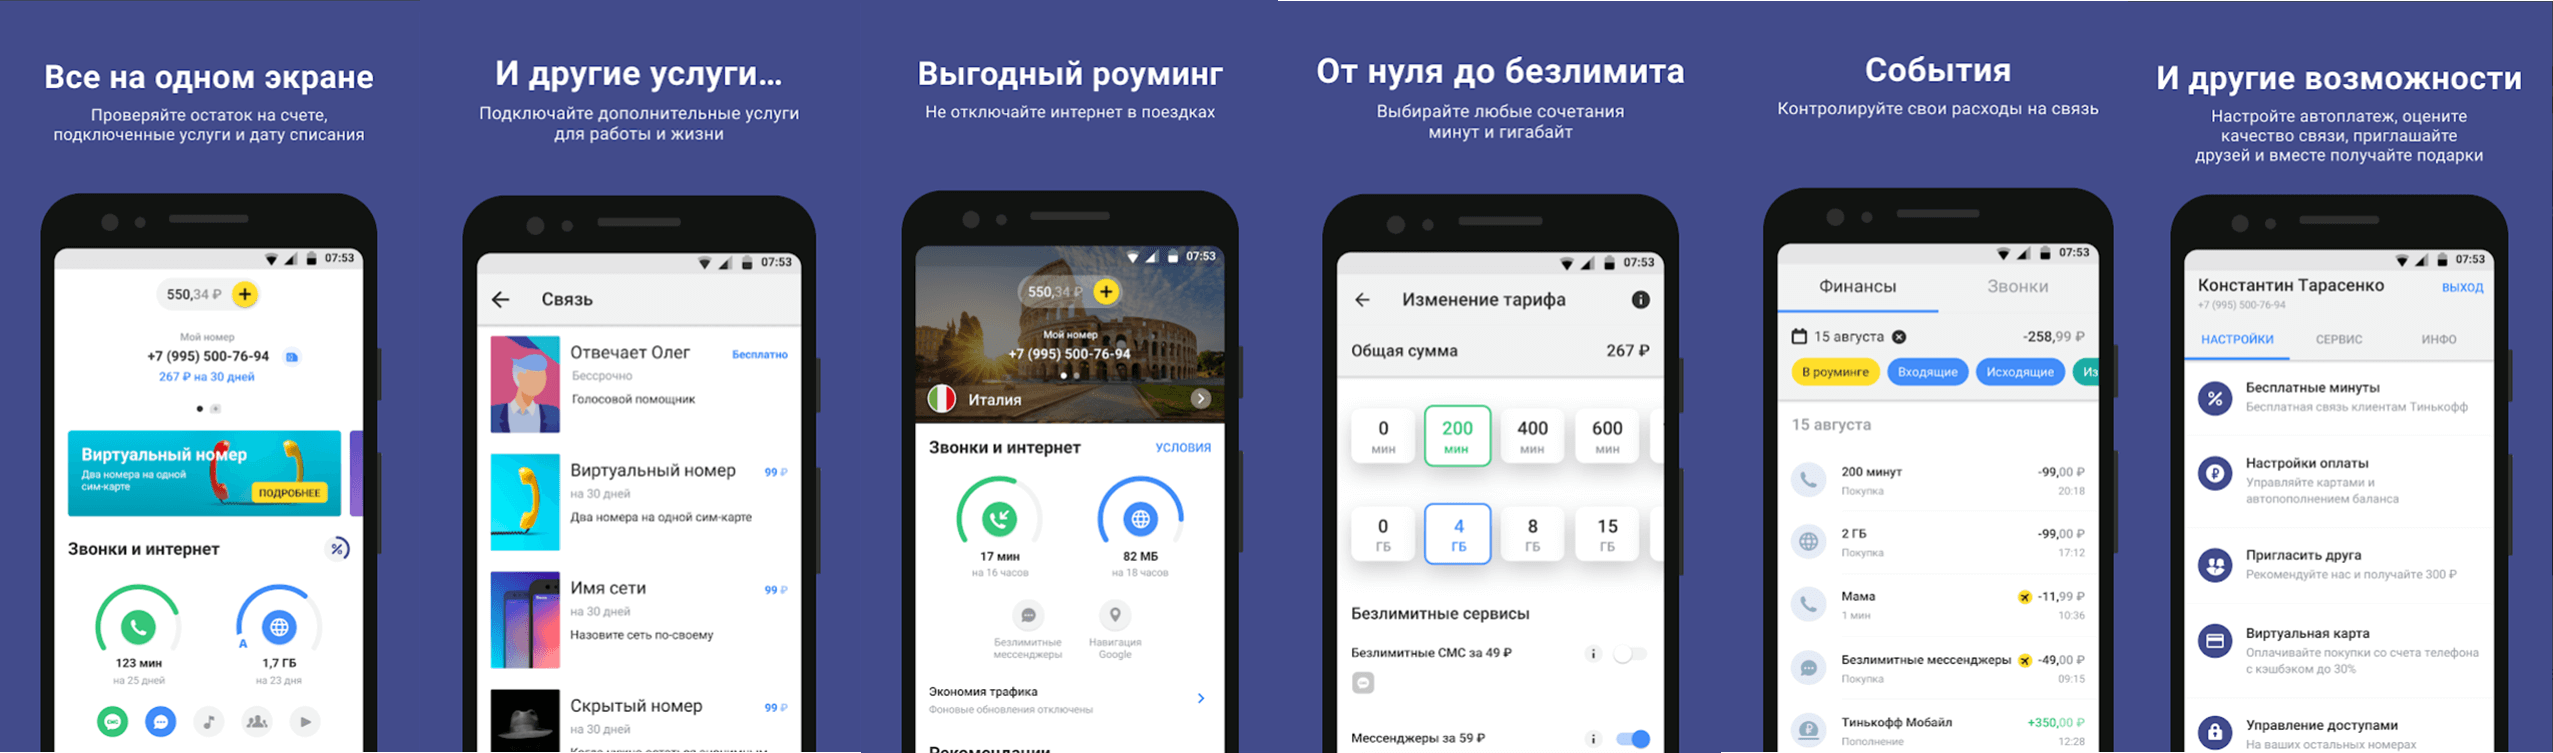 Как мы разрабатываем новый фронтенд tinkoff.ru / хабр